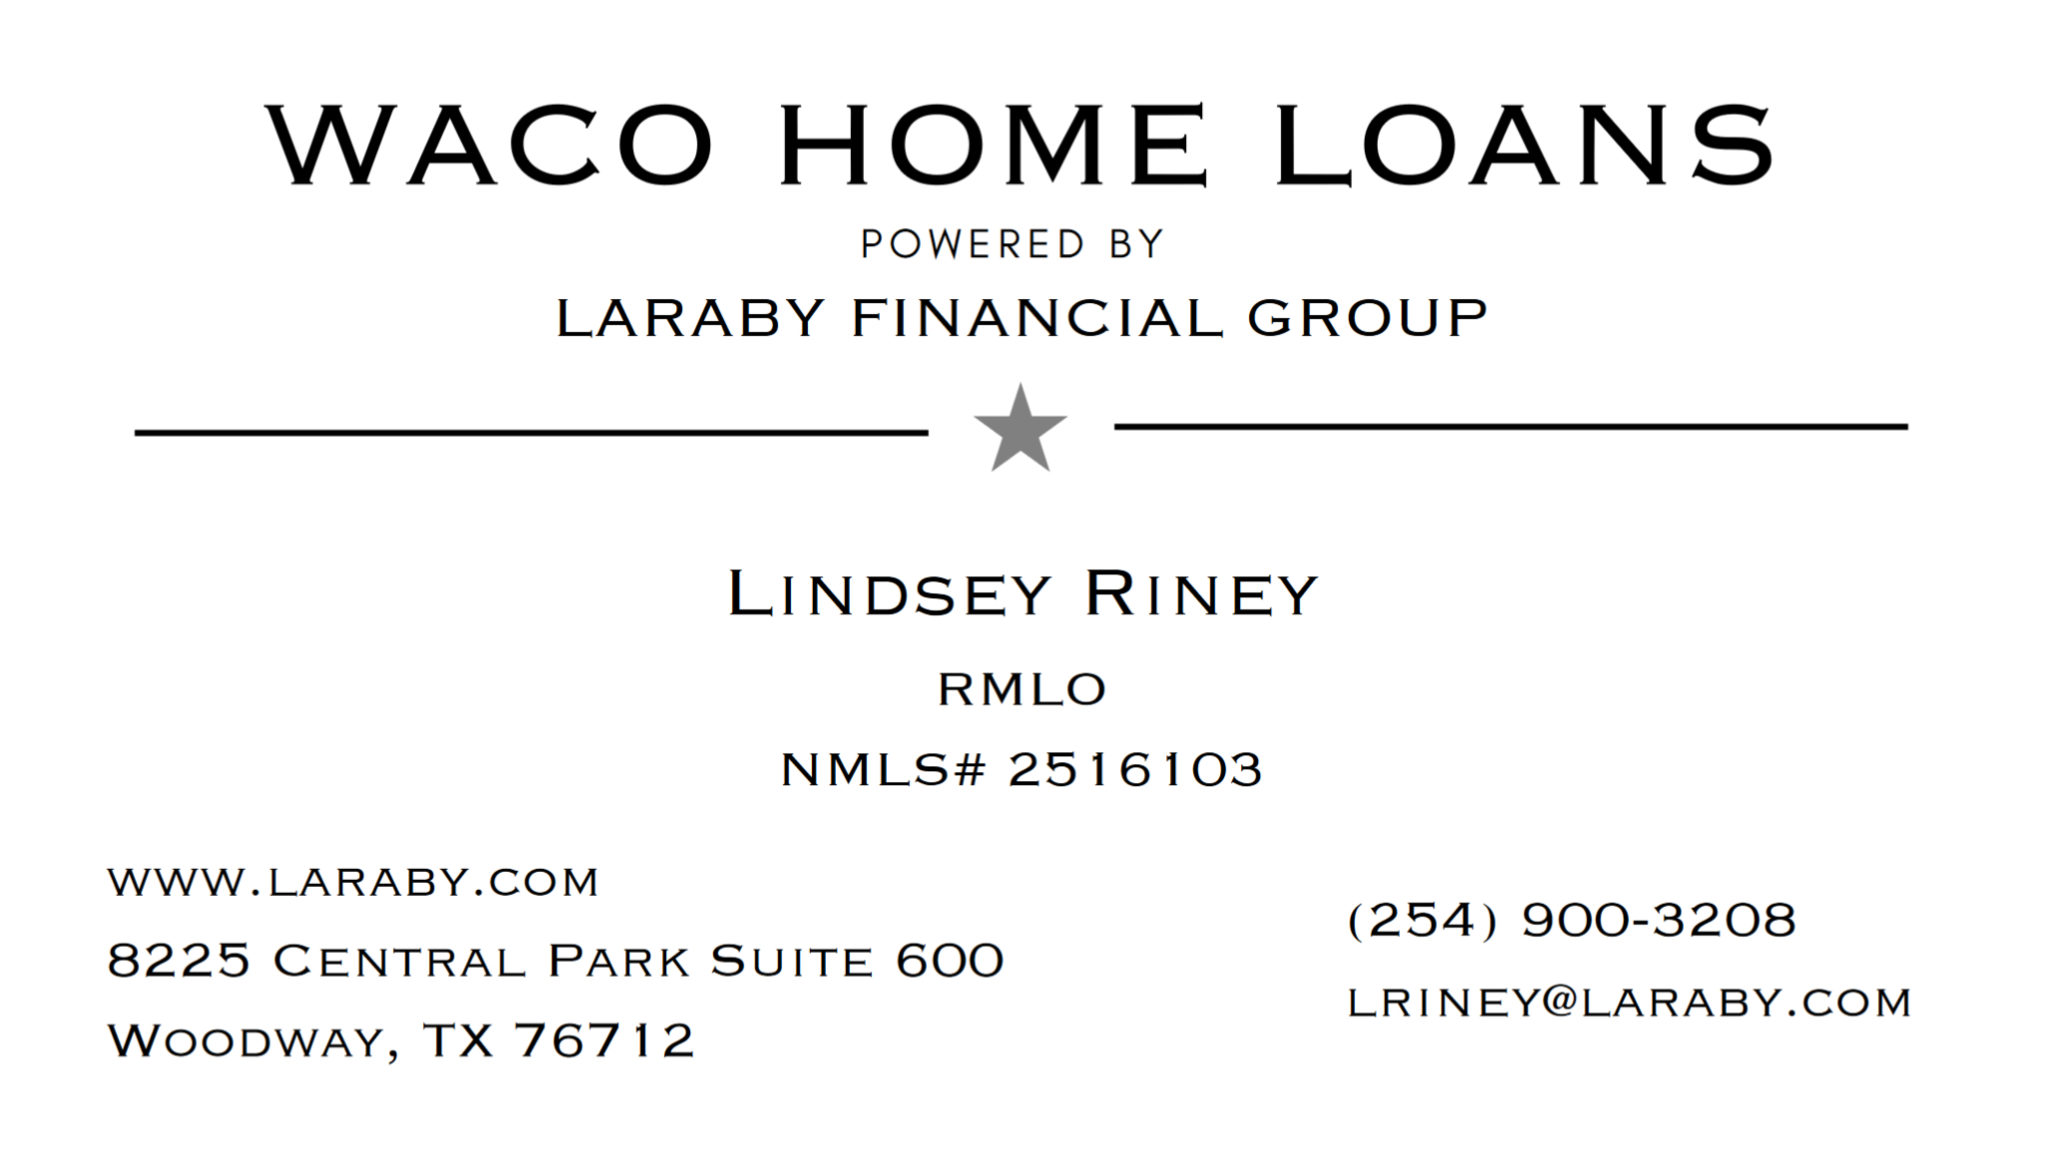 Waco Home Loans Laraby Financial Group Lindsey Riney